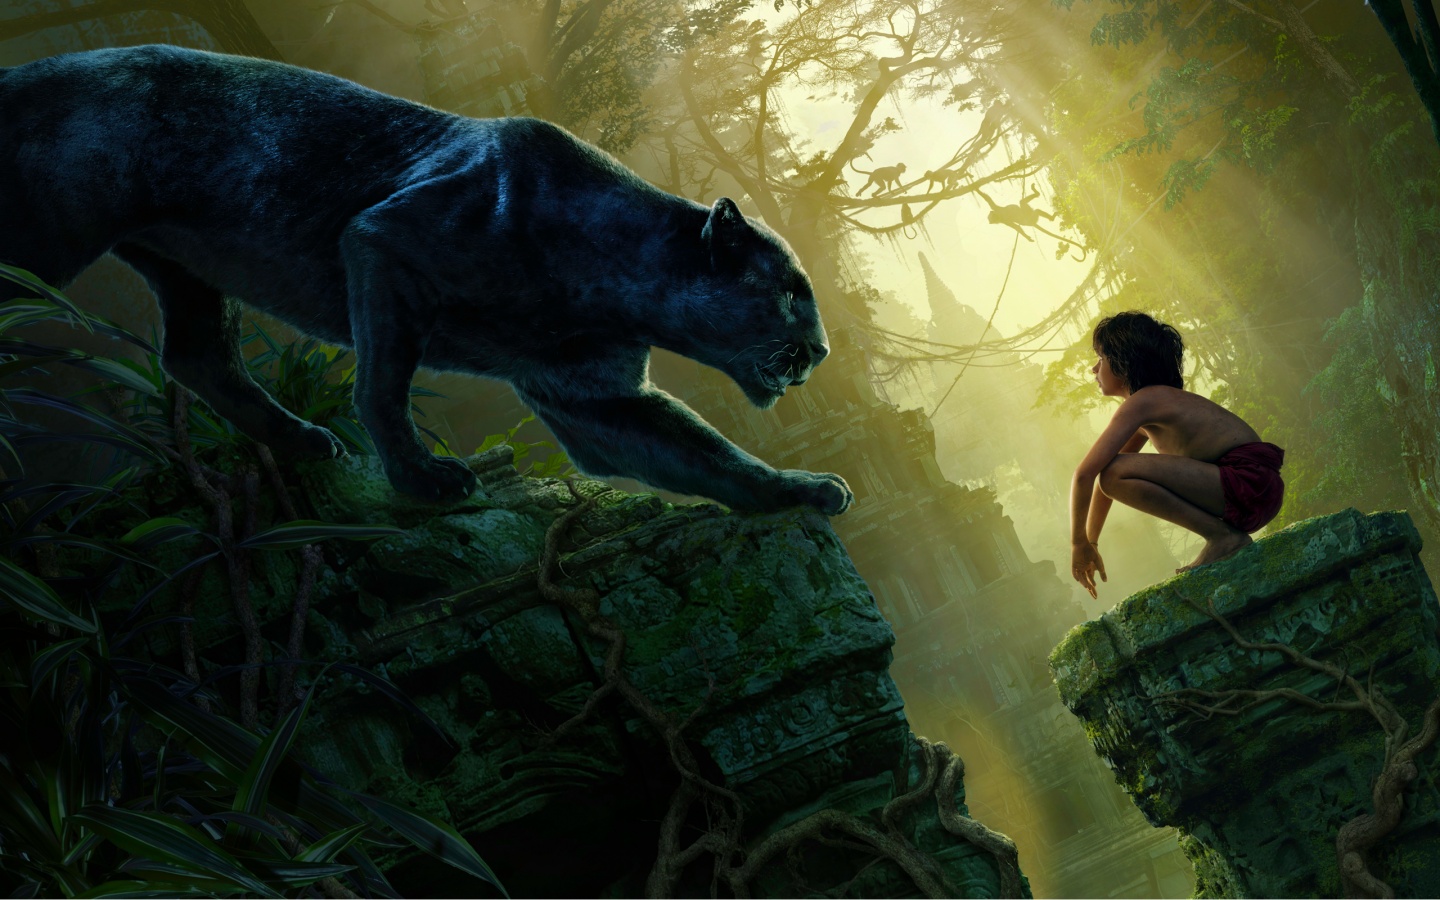 Free download Bagheera Black Panther The Jungle Book HD Wallpaper iHD